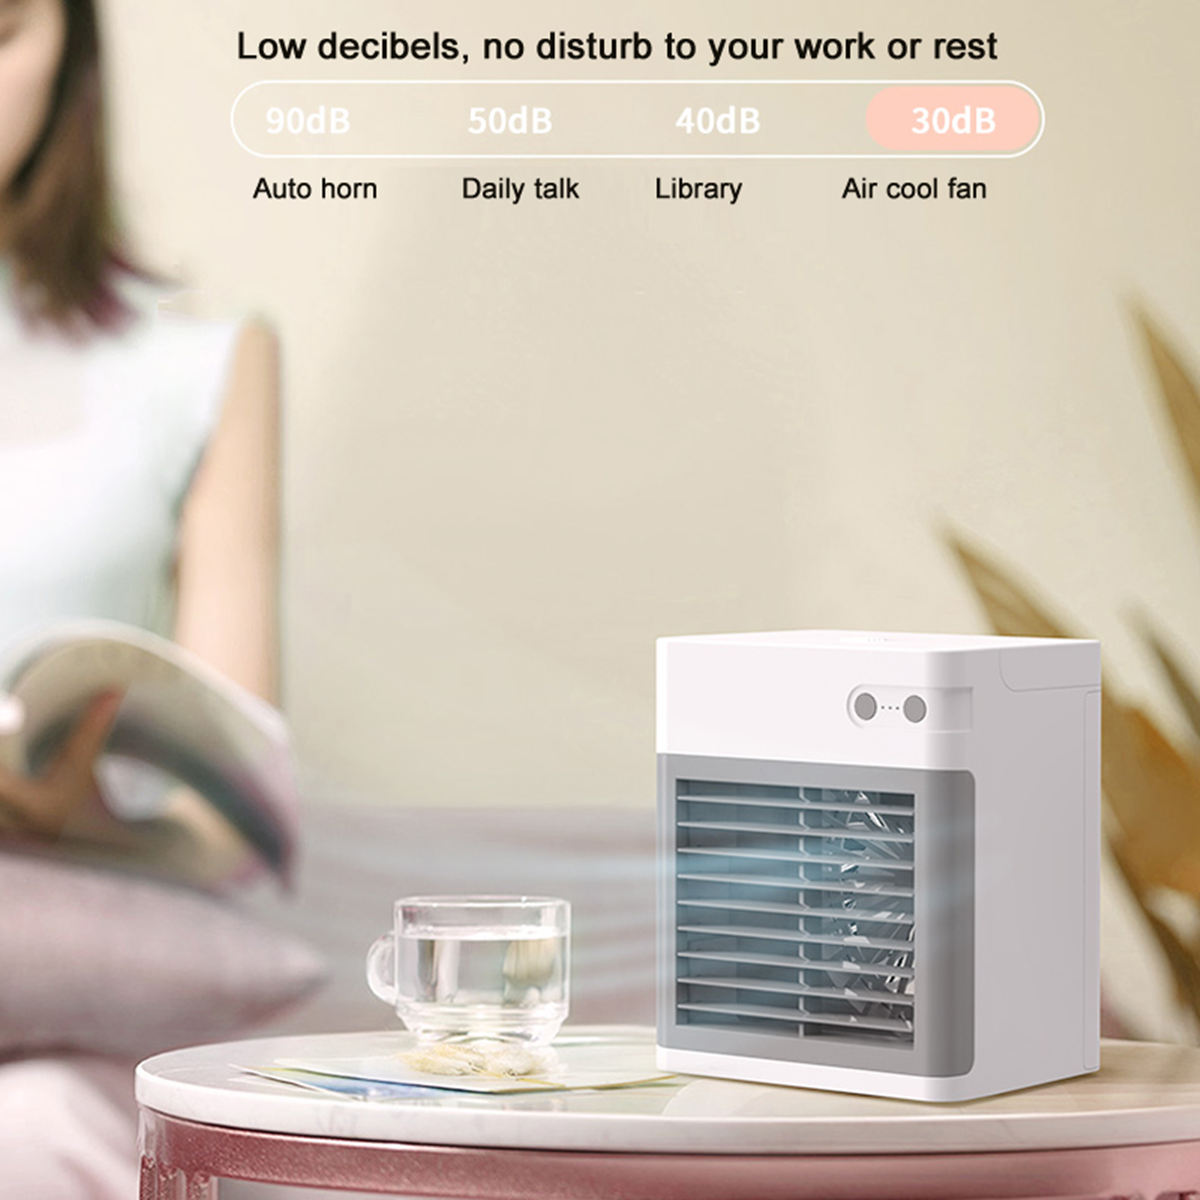 air cooler fan portable